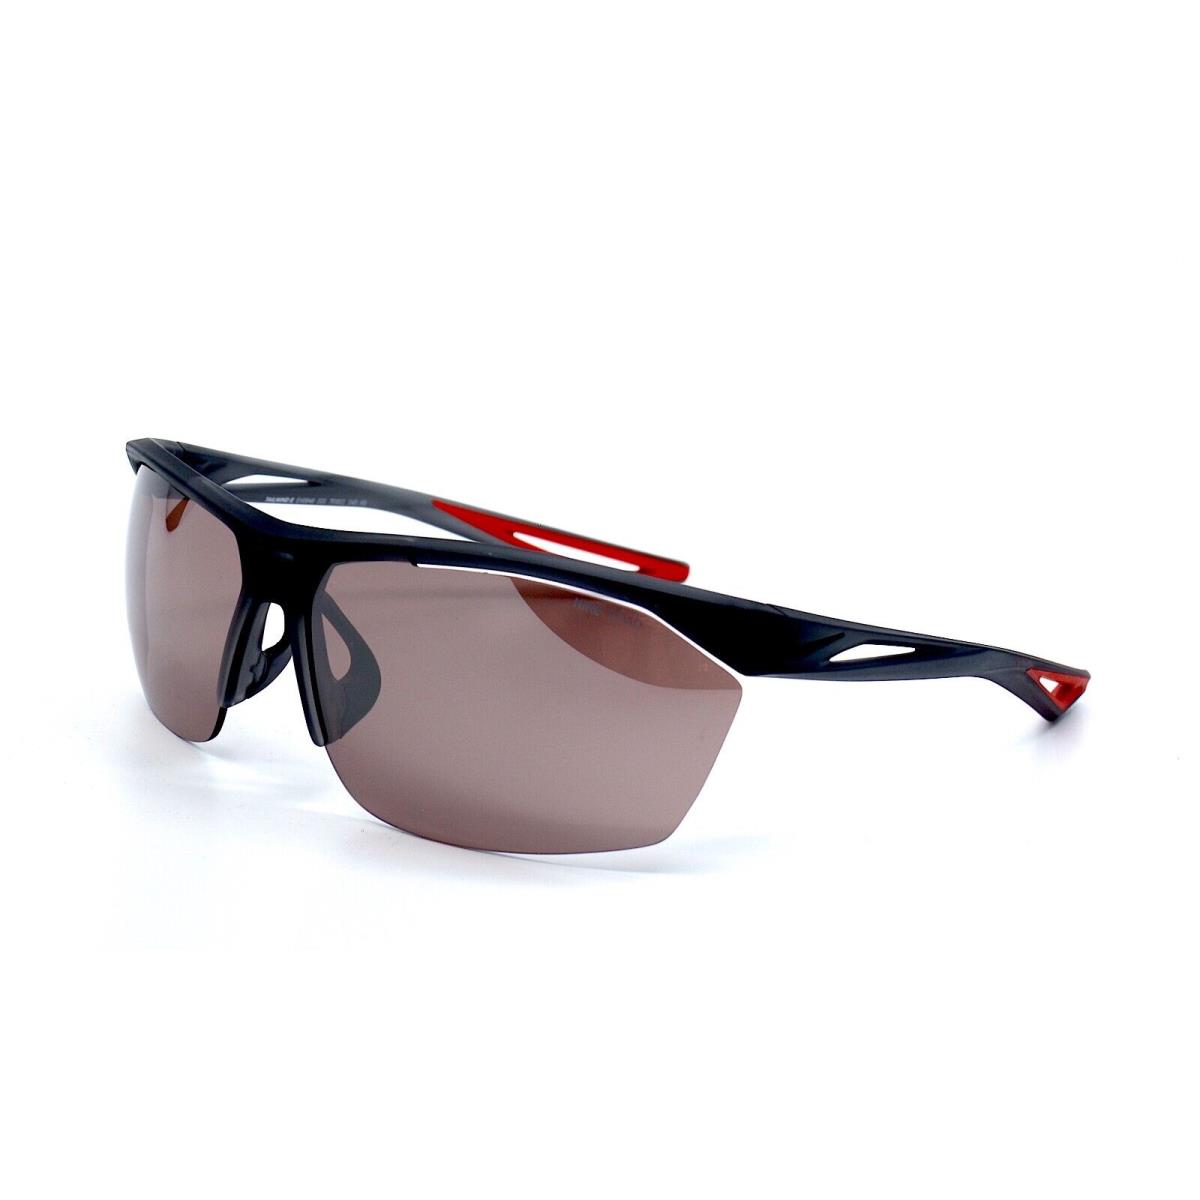 Nike Tailwind EV0946 Dark Grey Sunglasses 70-11 - Frame: Gray, Lens: Brown